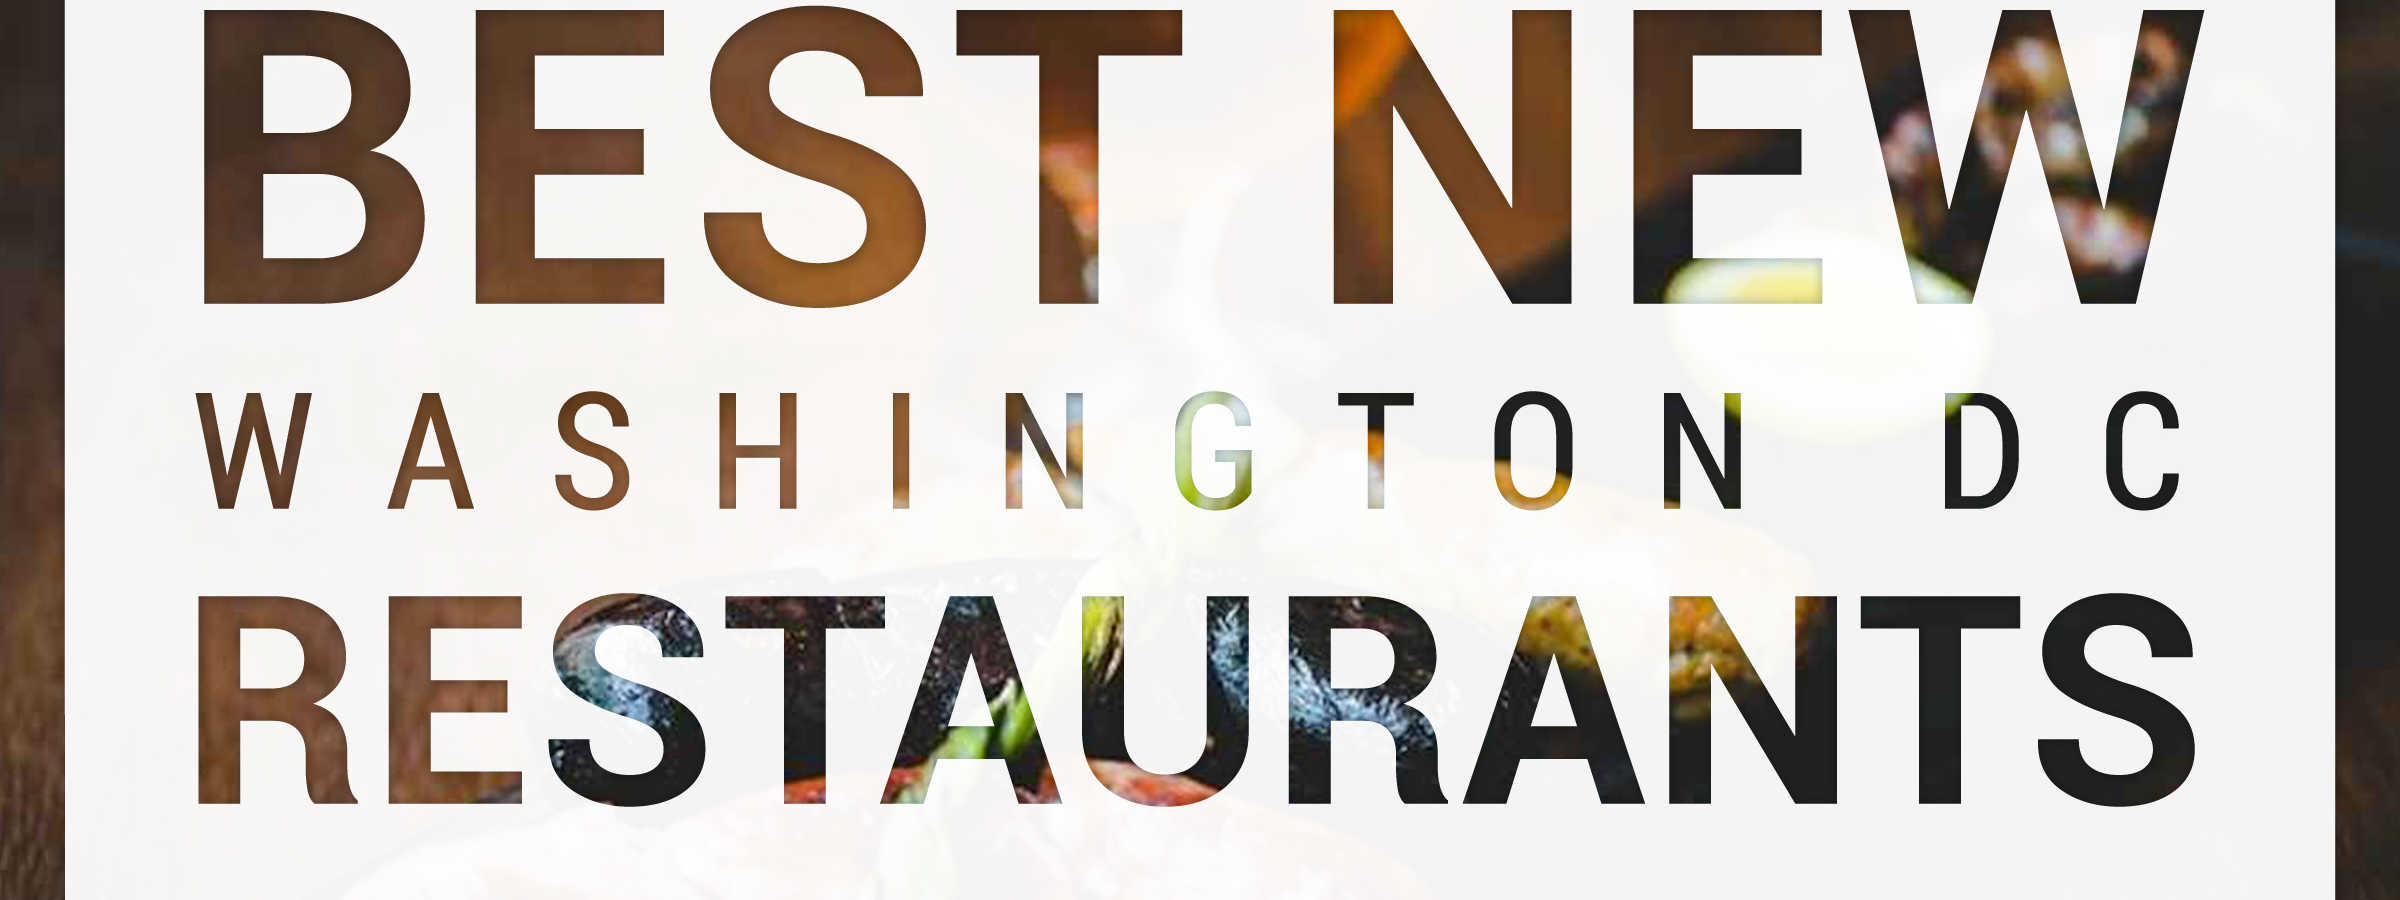 Best Restaurants in DC - Best Places to Eat in Washington DC